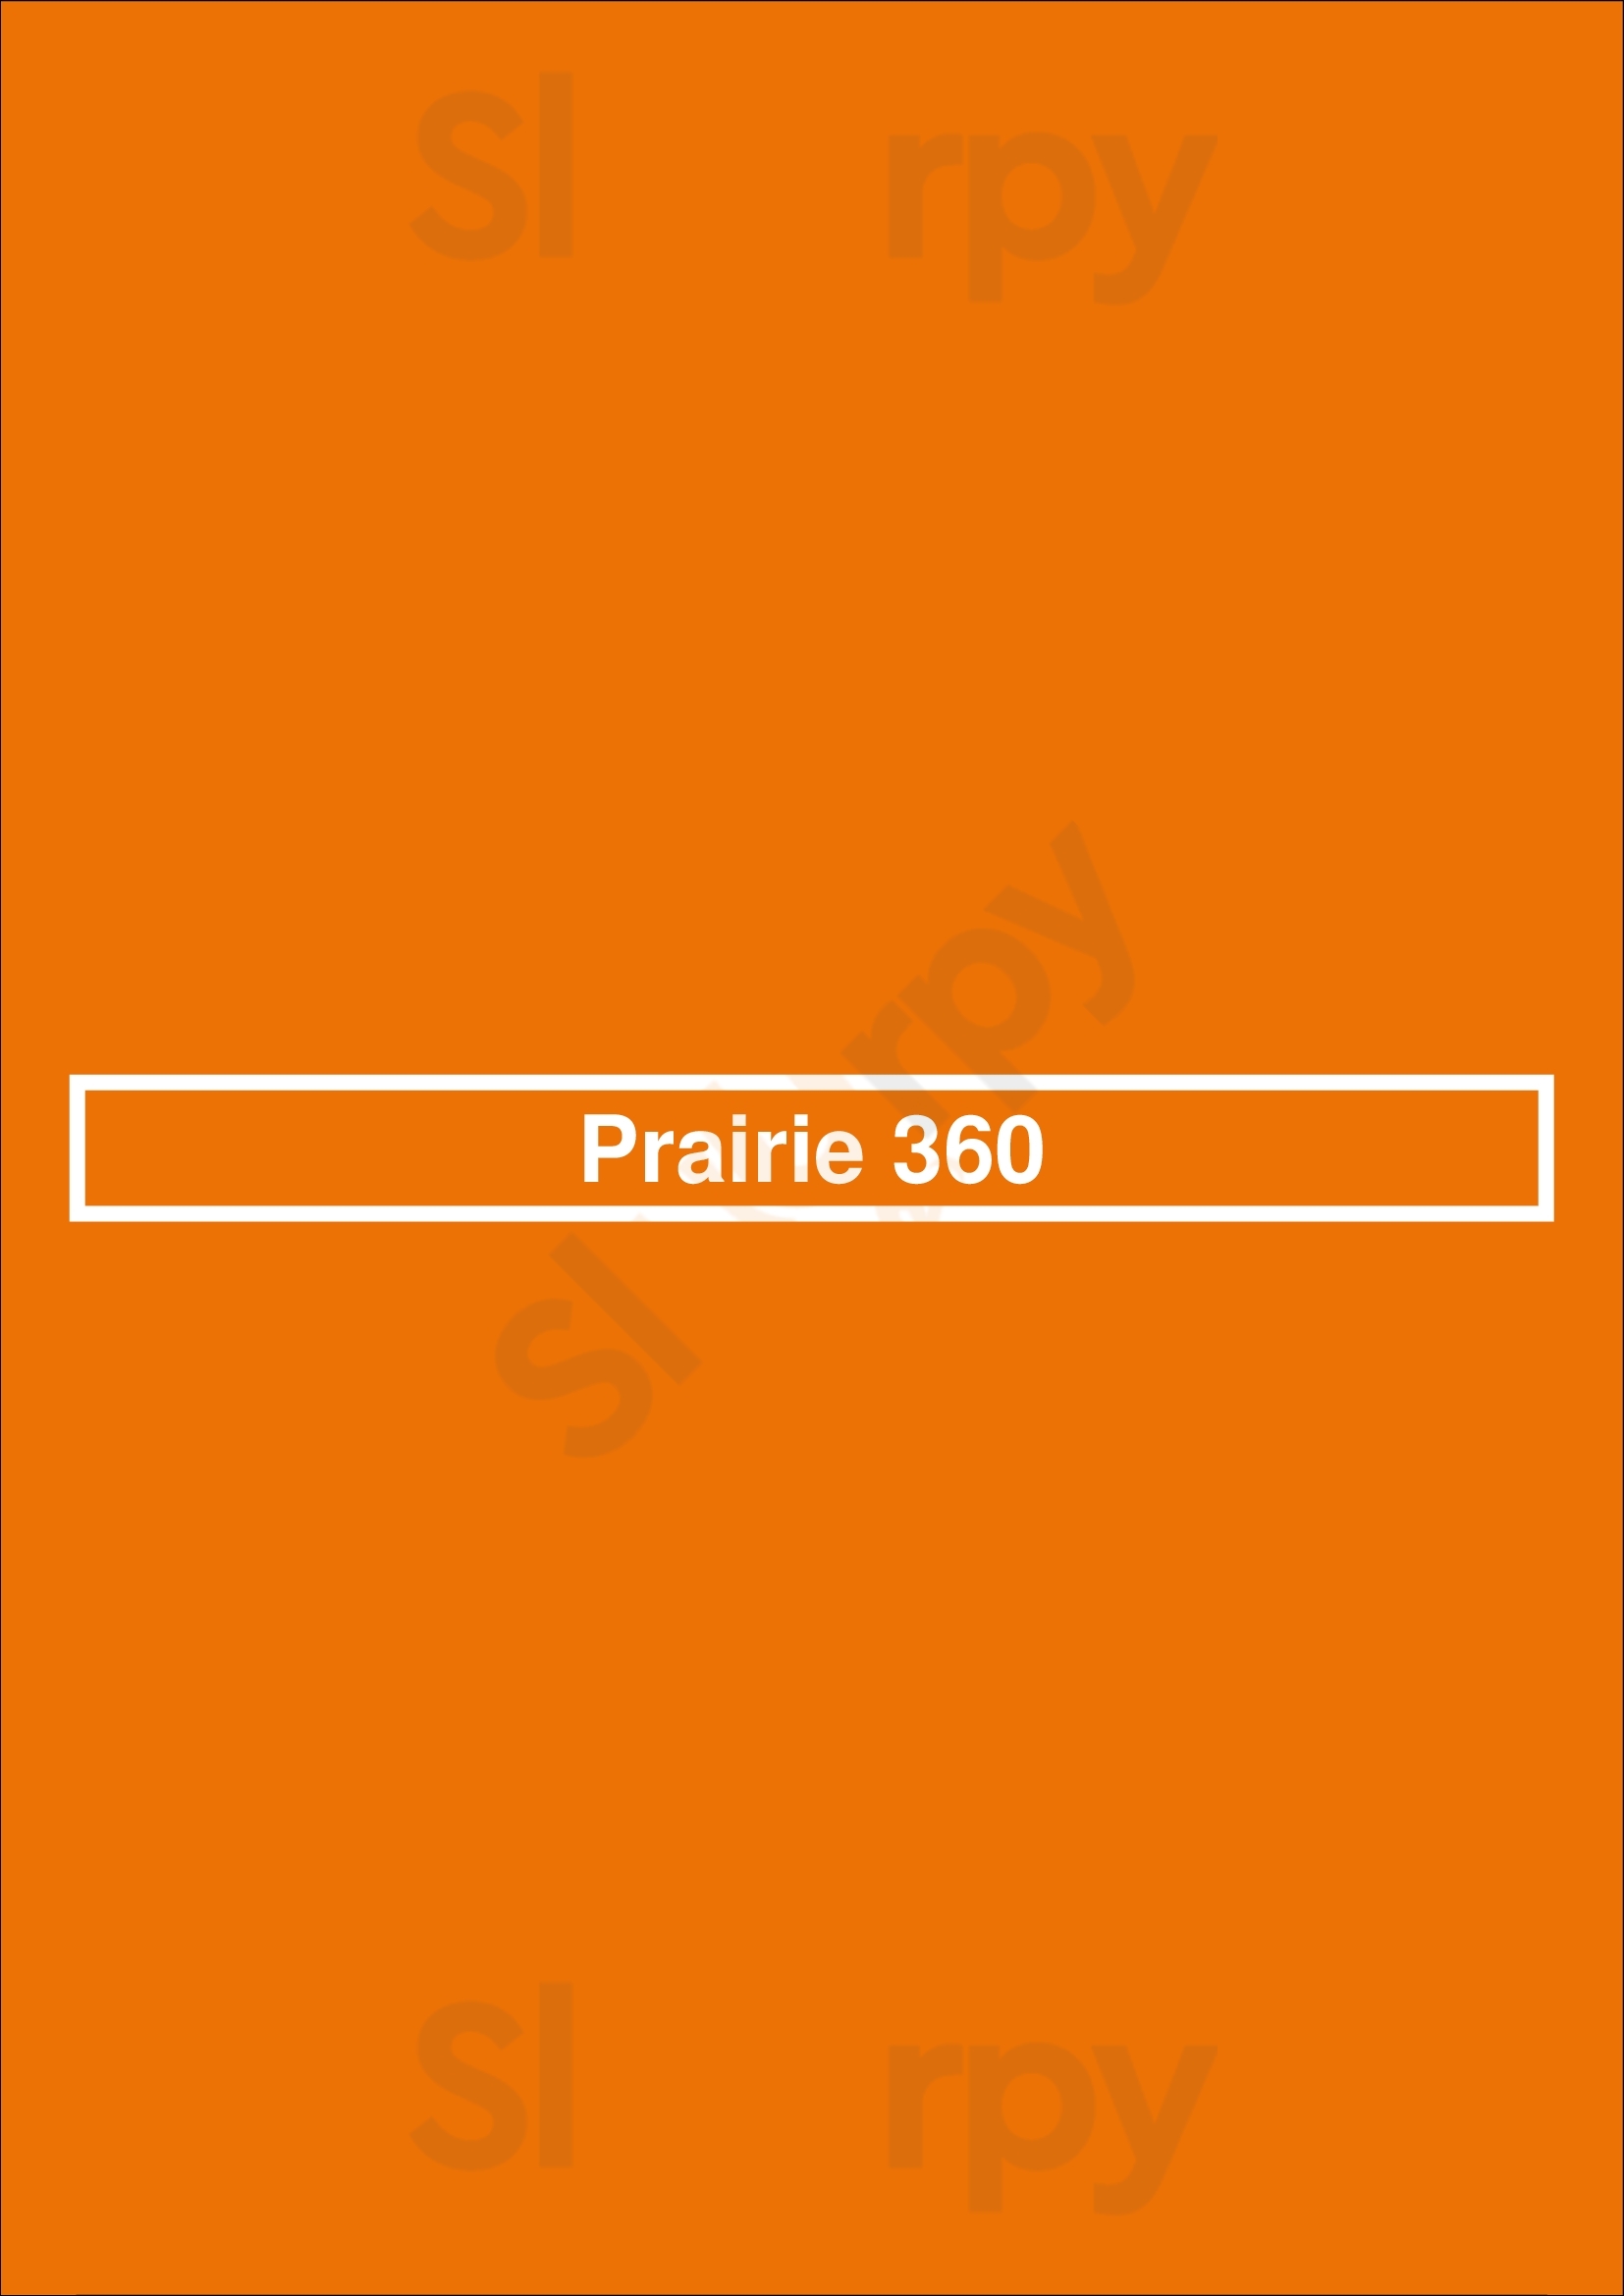 Prairie 360 Winnipeg Menu - 1